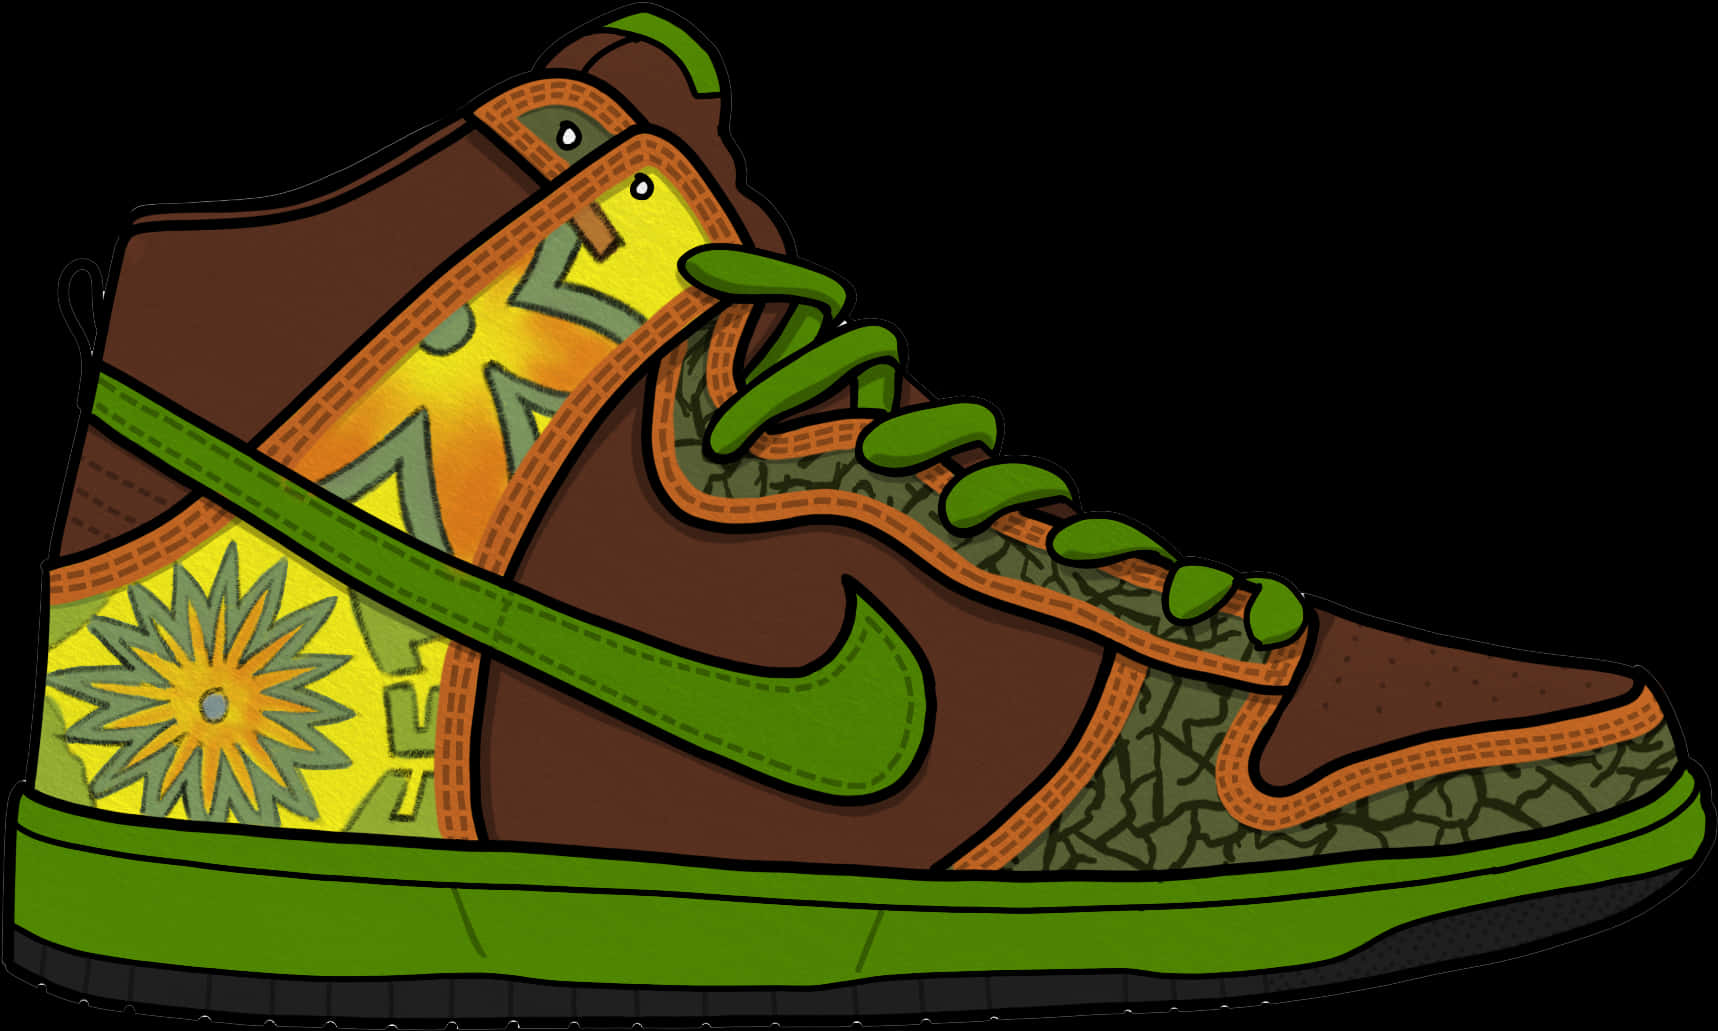 A Cartoon Of A Shoe